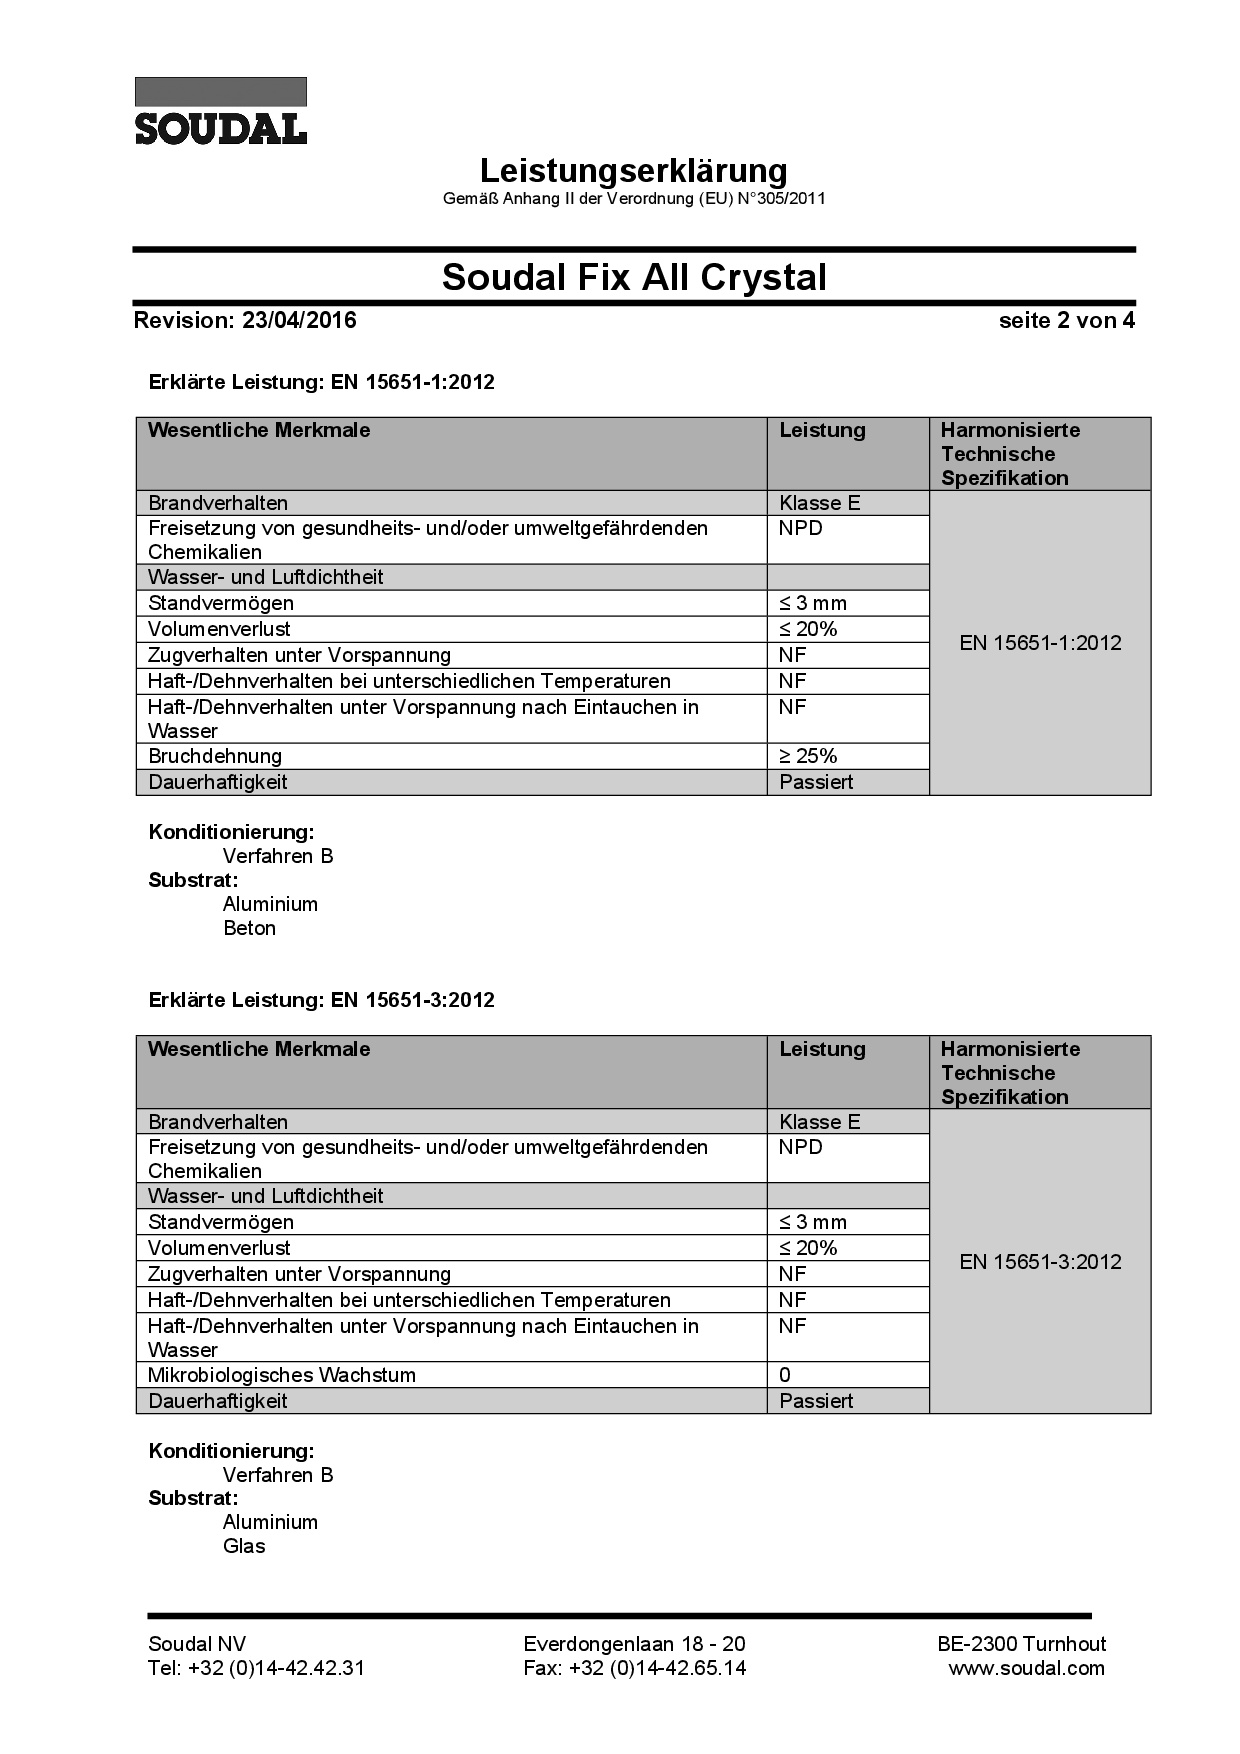 Soudal-Crystal-DOP-jpg-0023rrdxqXlPb8Nt